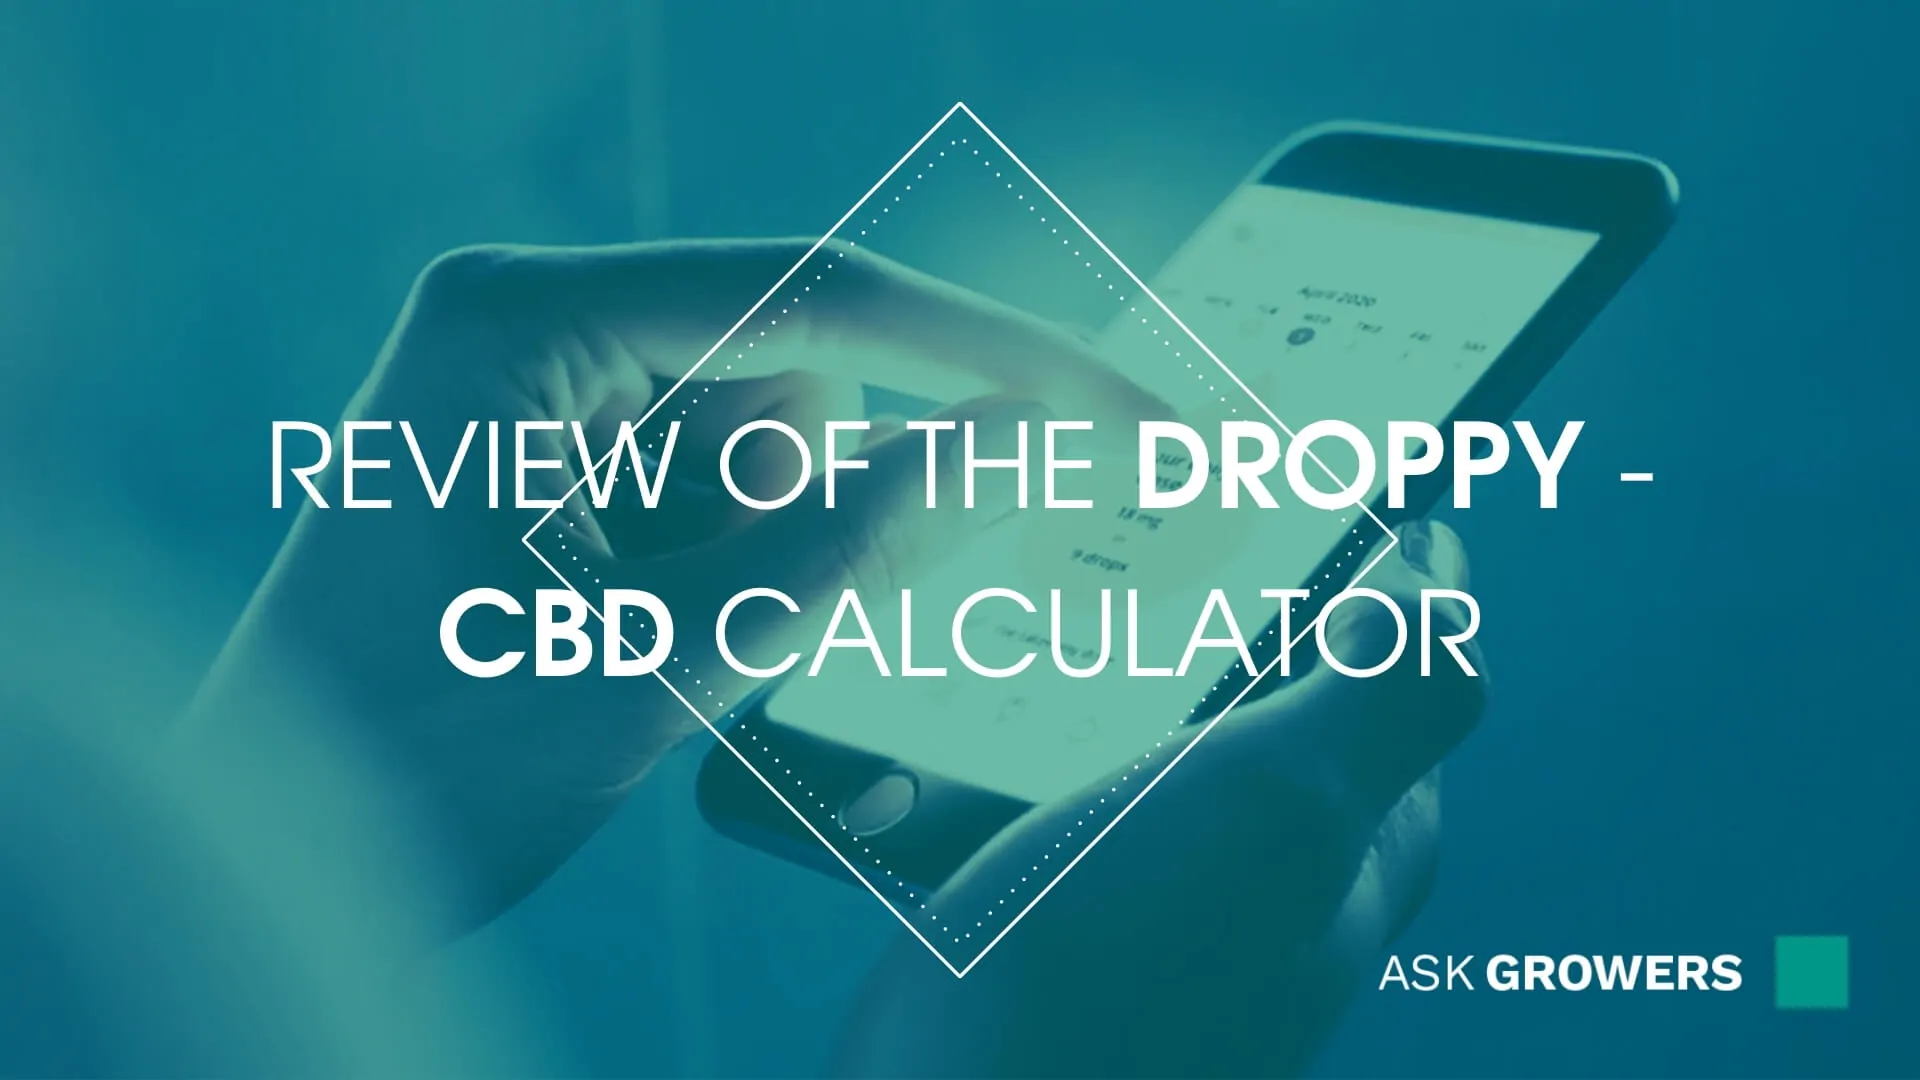 Review of the Droppy - CBD Calculator